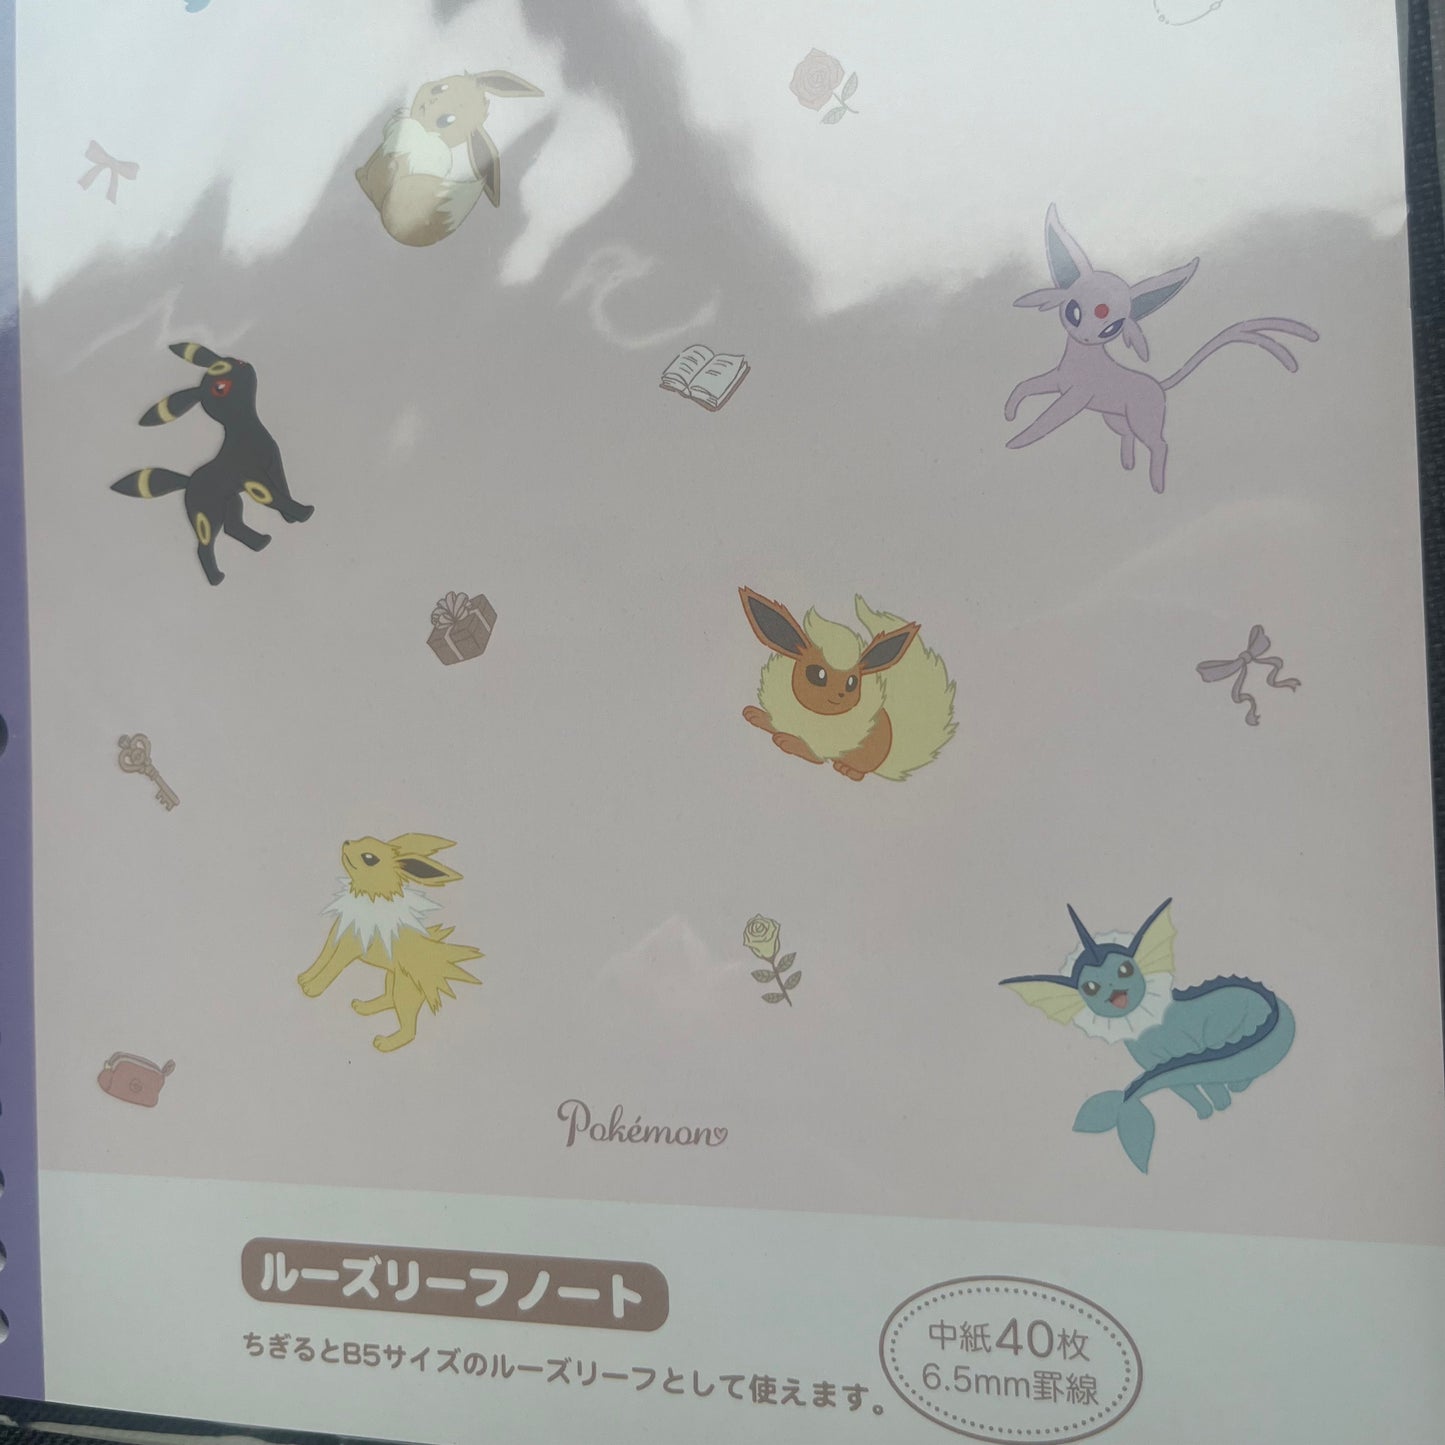 Pokémon Eeveelutions A4 Notebook